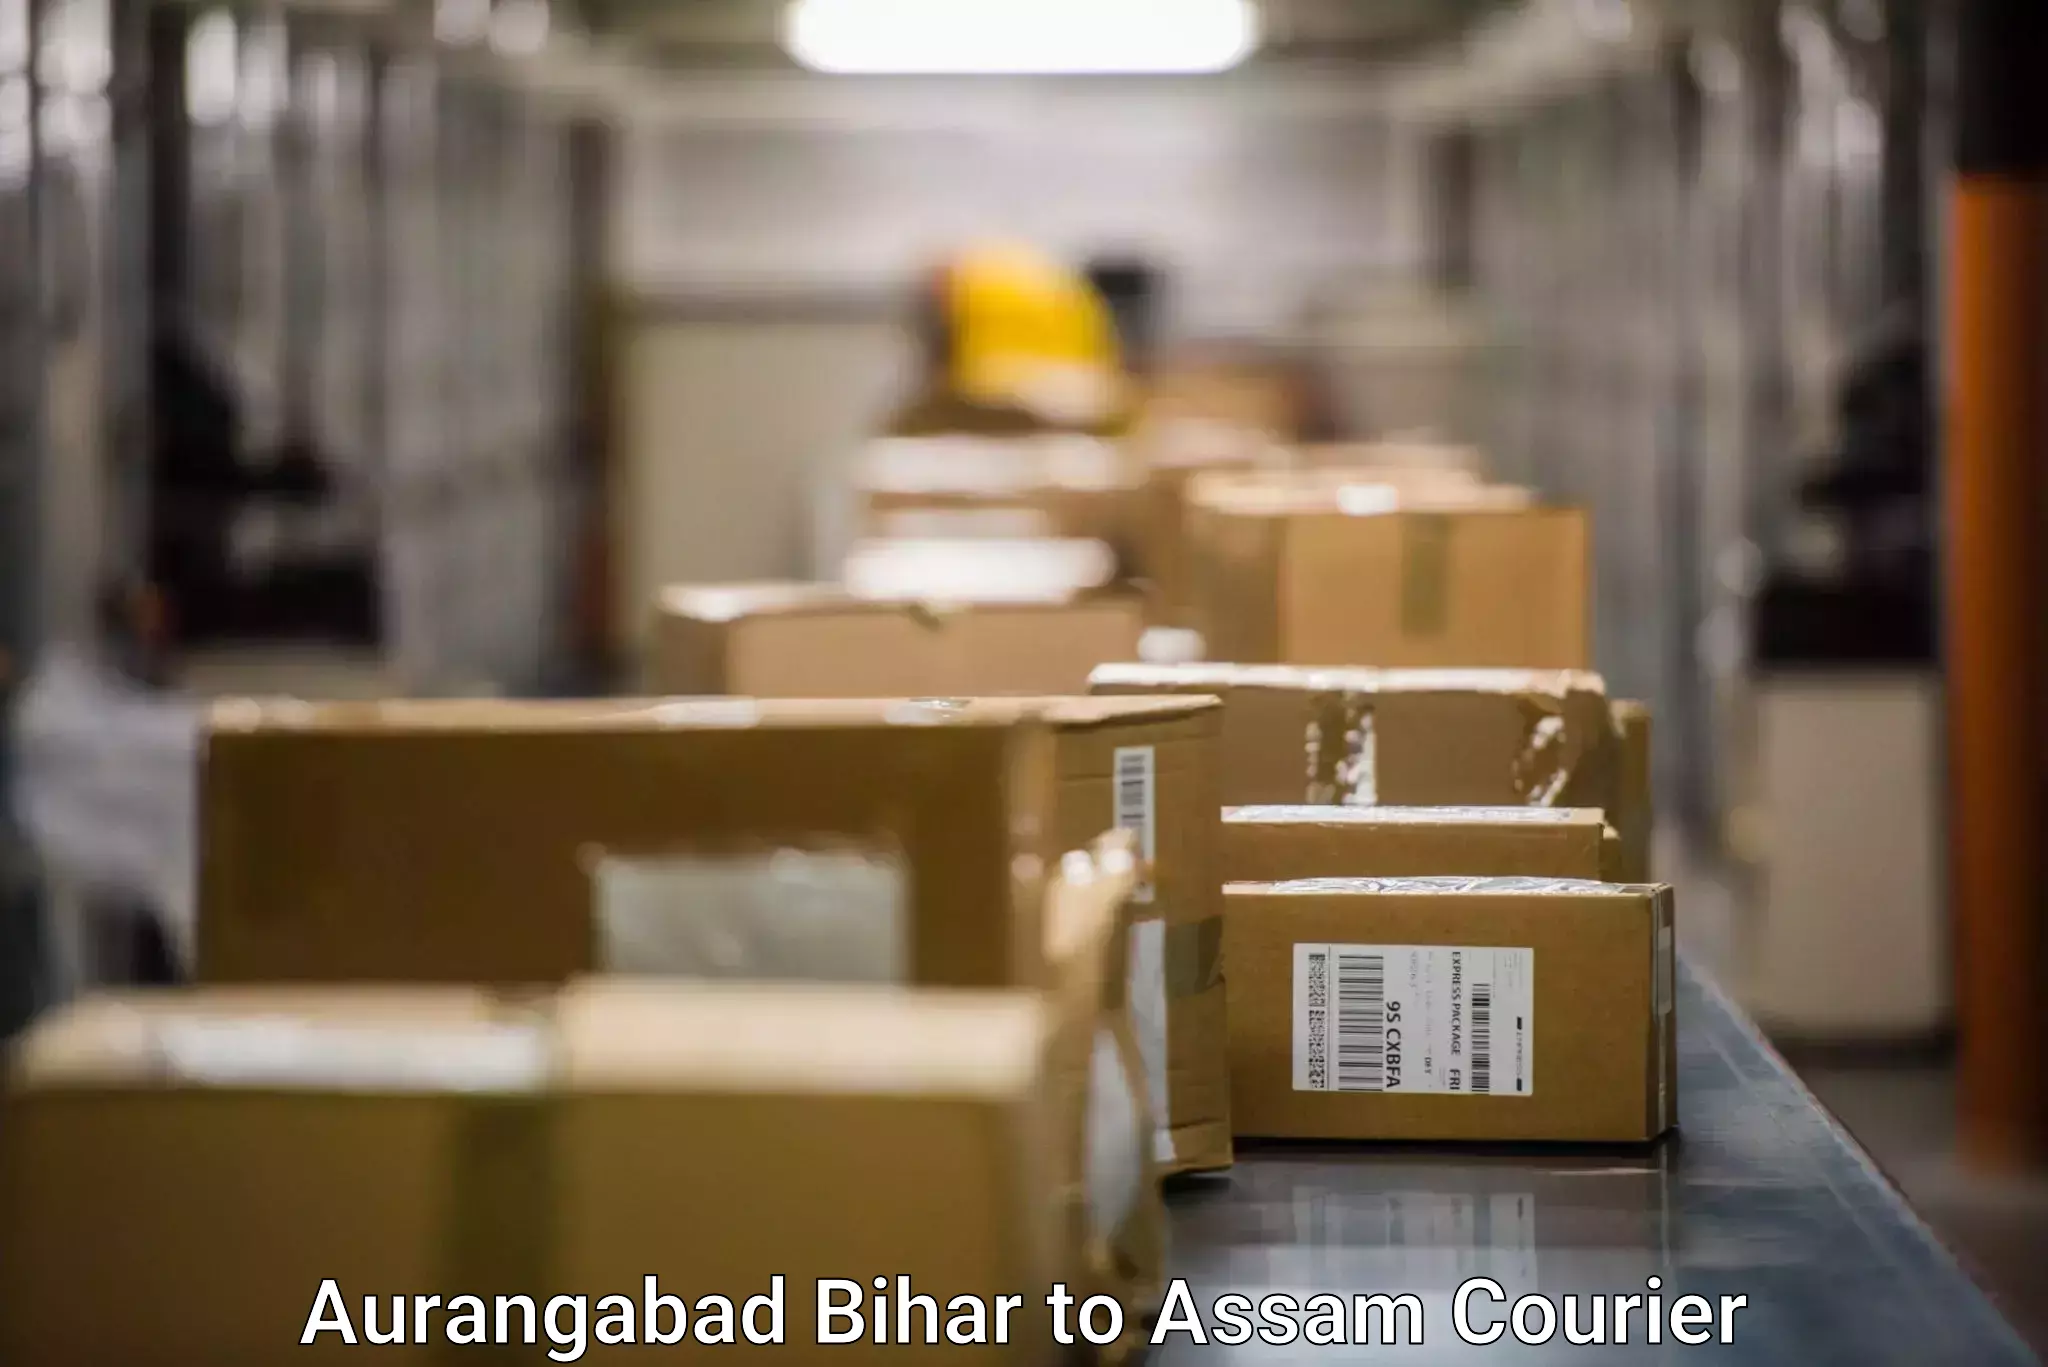 User-friendly delivery service Aurangabad Bihar to Guwahati University